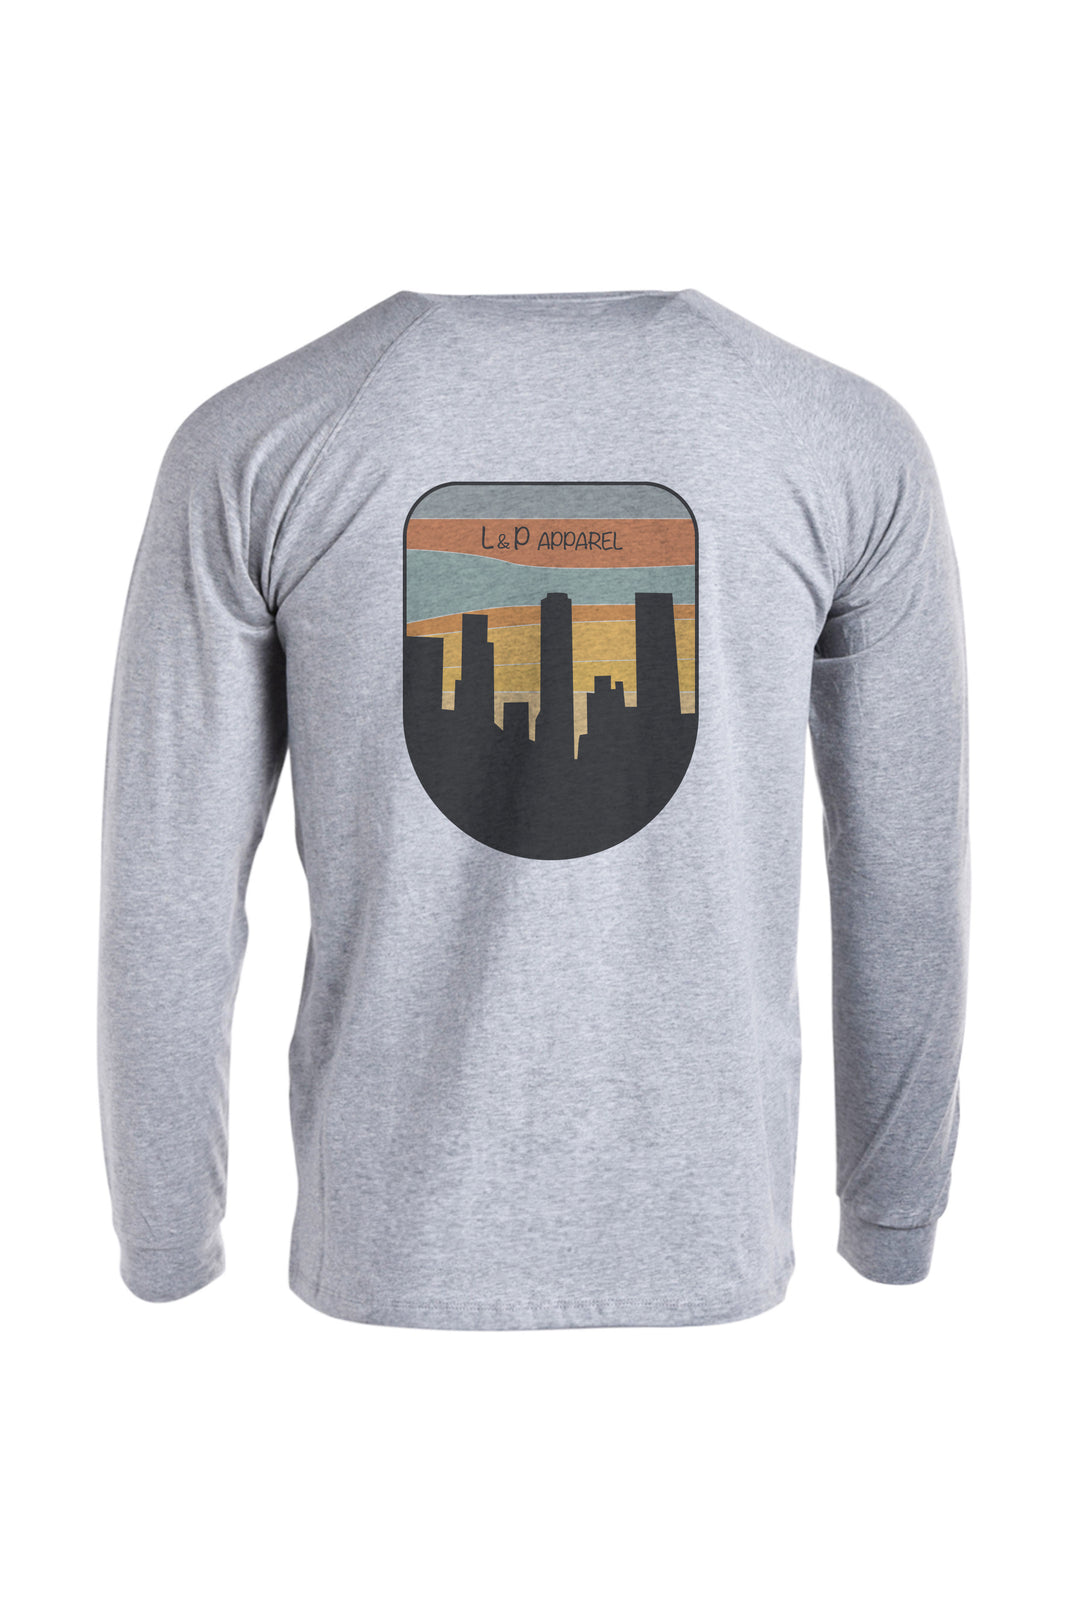 Long sleeve t-shirt [Chicago]